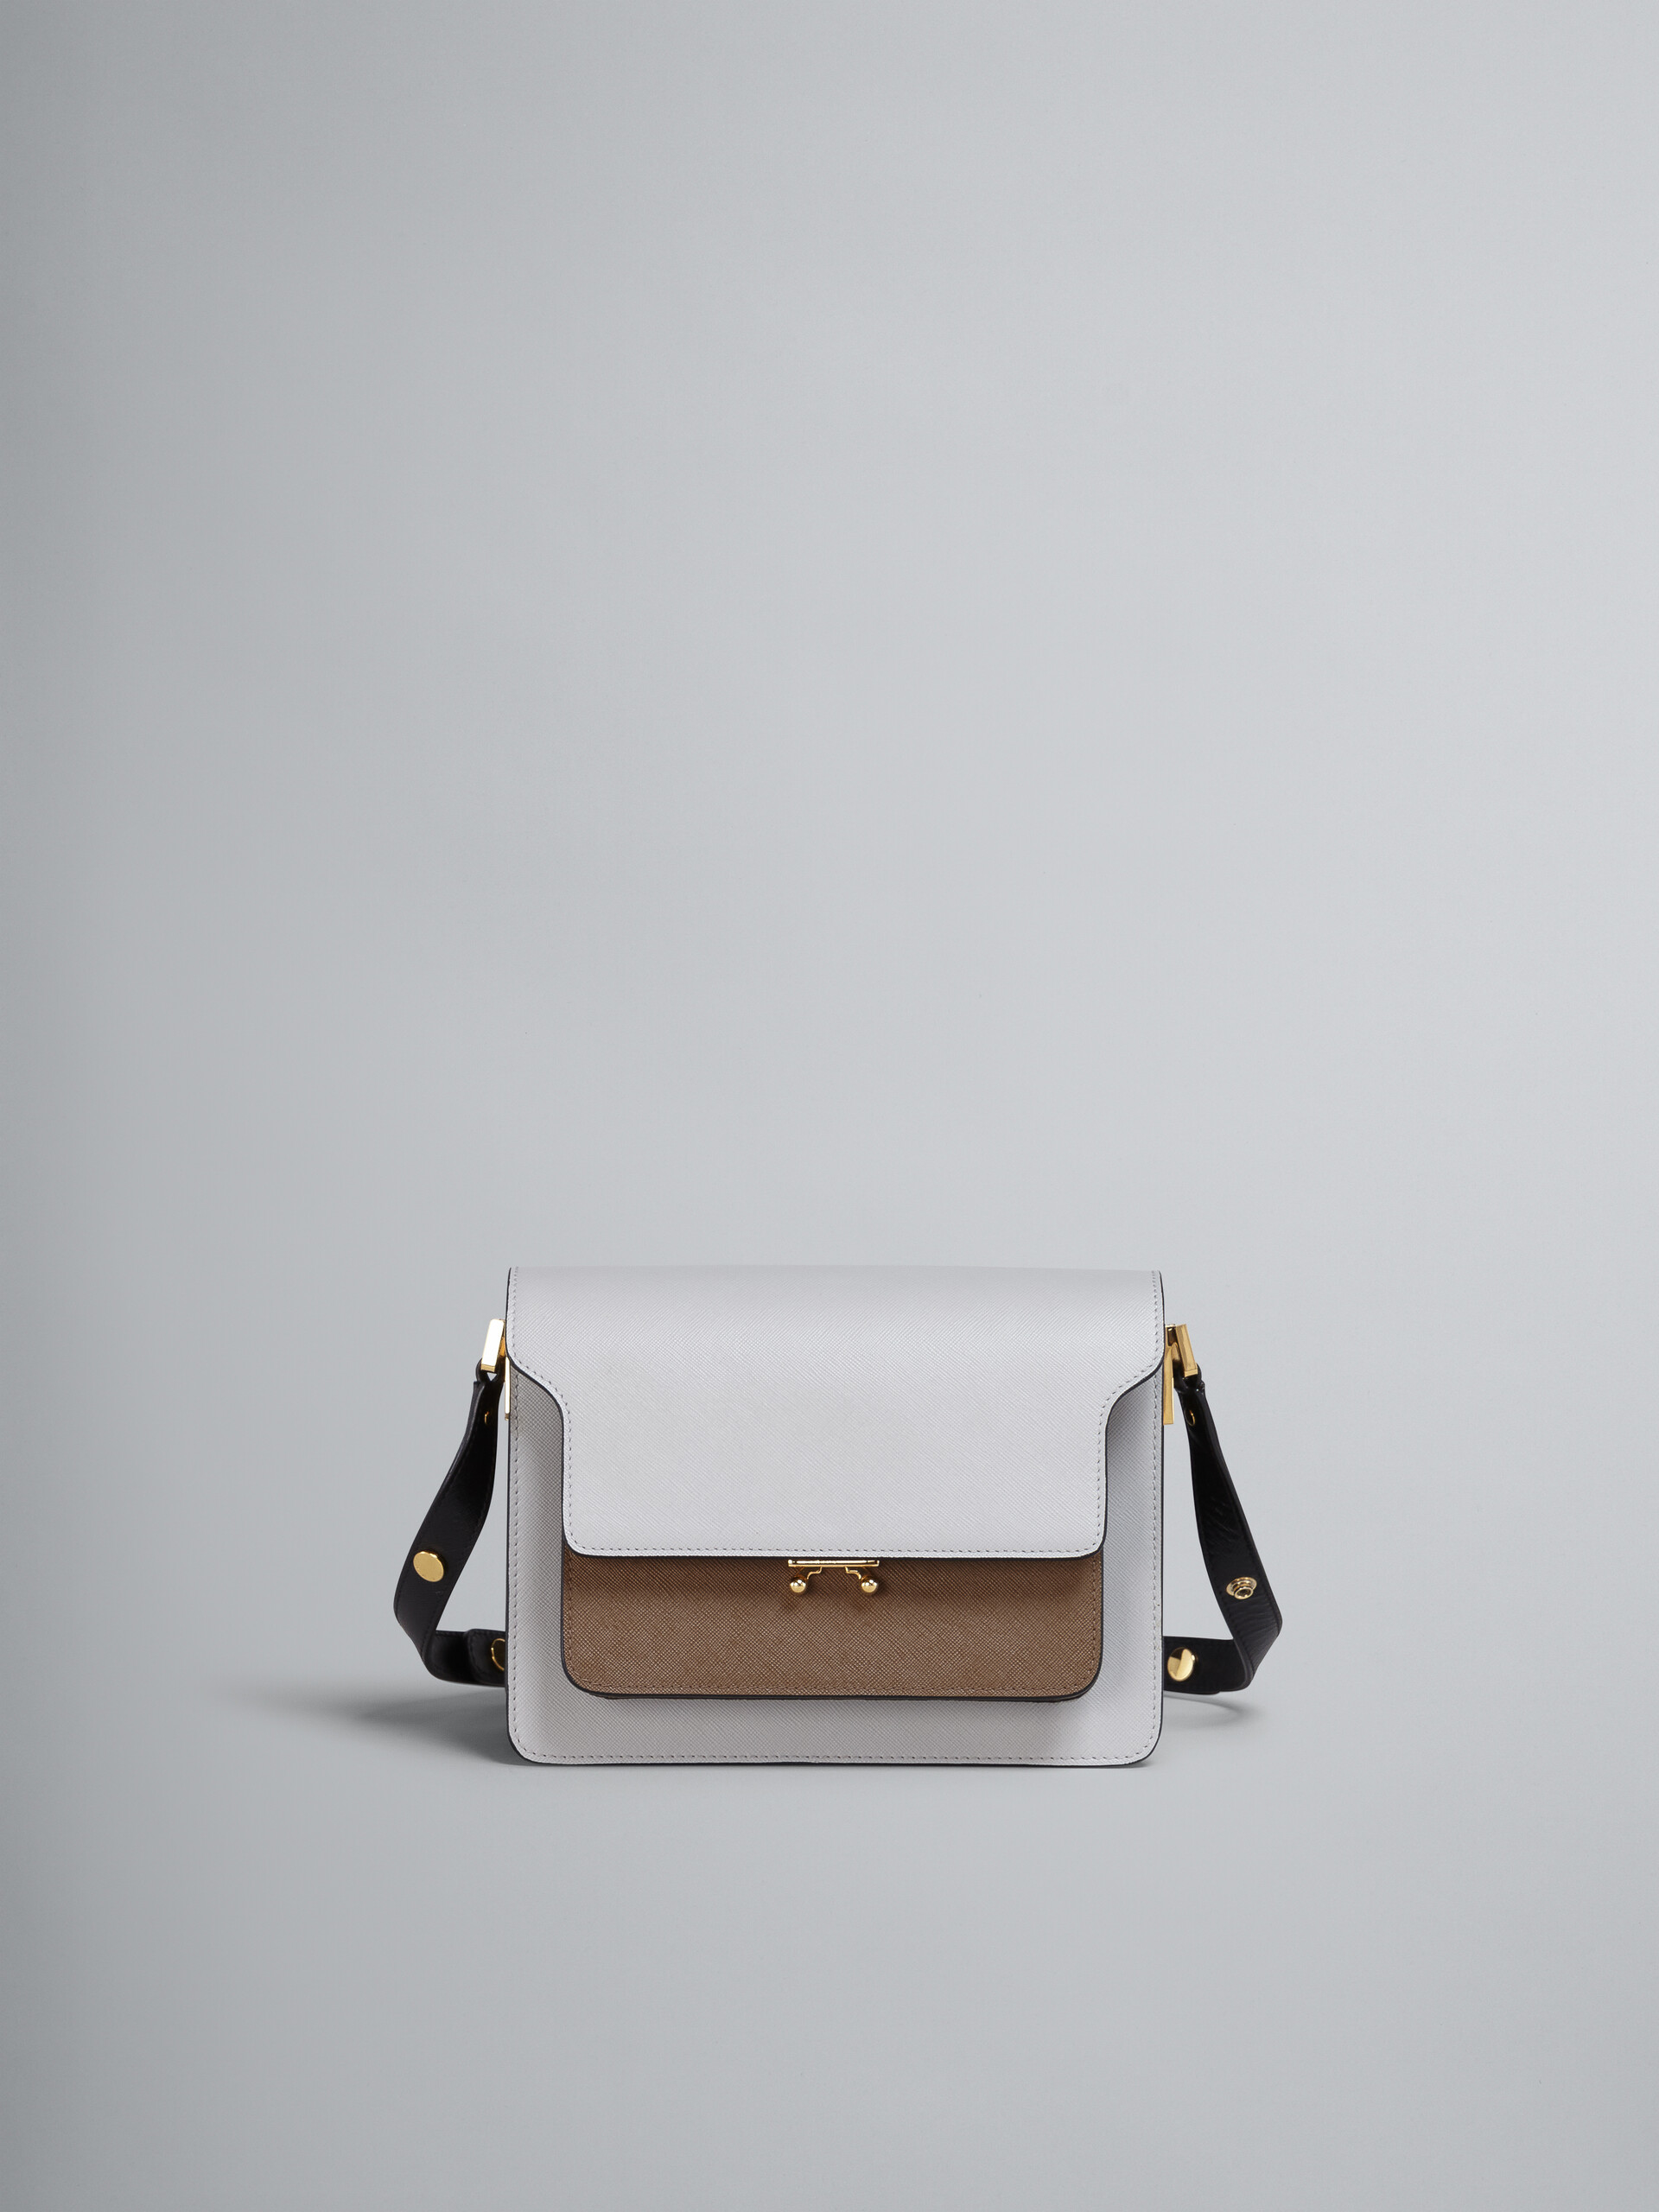 TRUNK medium bag in grey brown and black saffiano leather - Shoulder Bag - Image 1